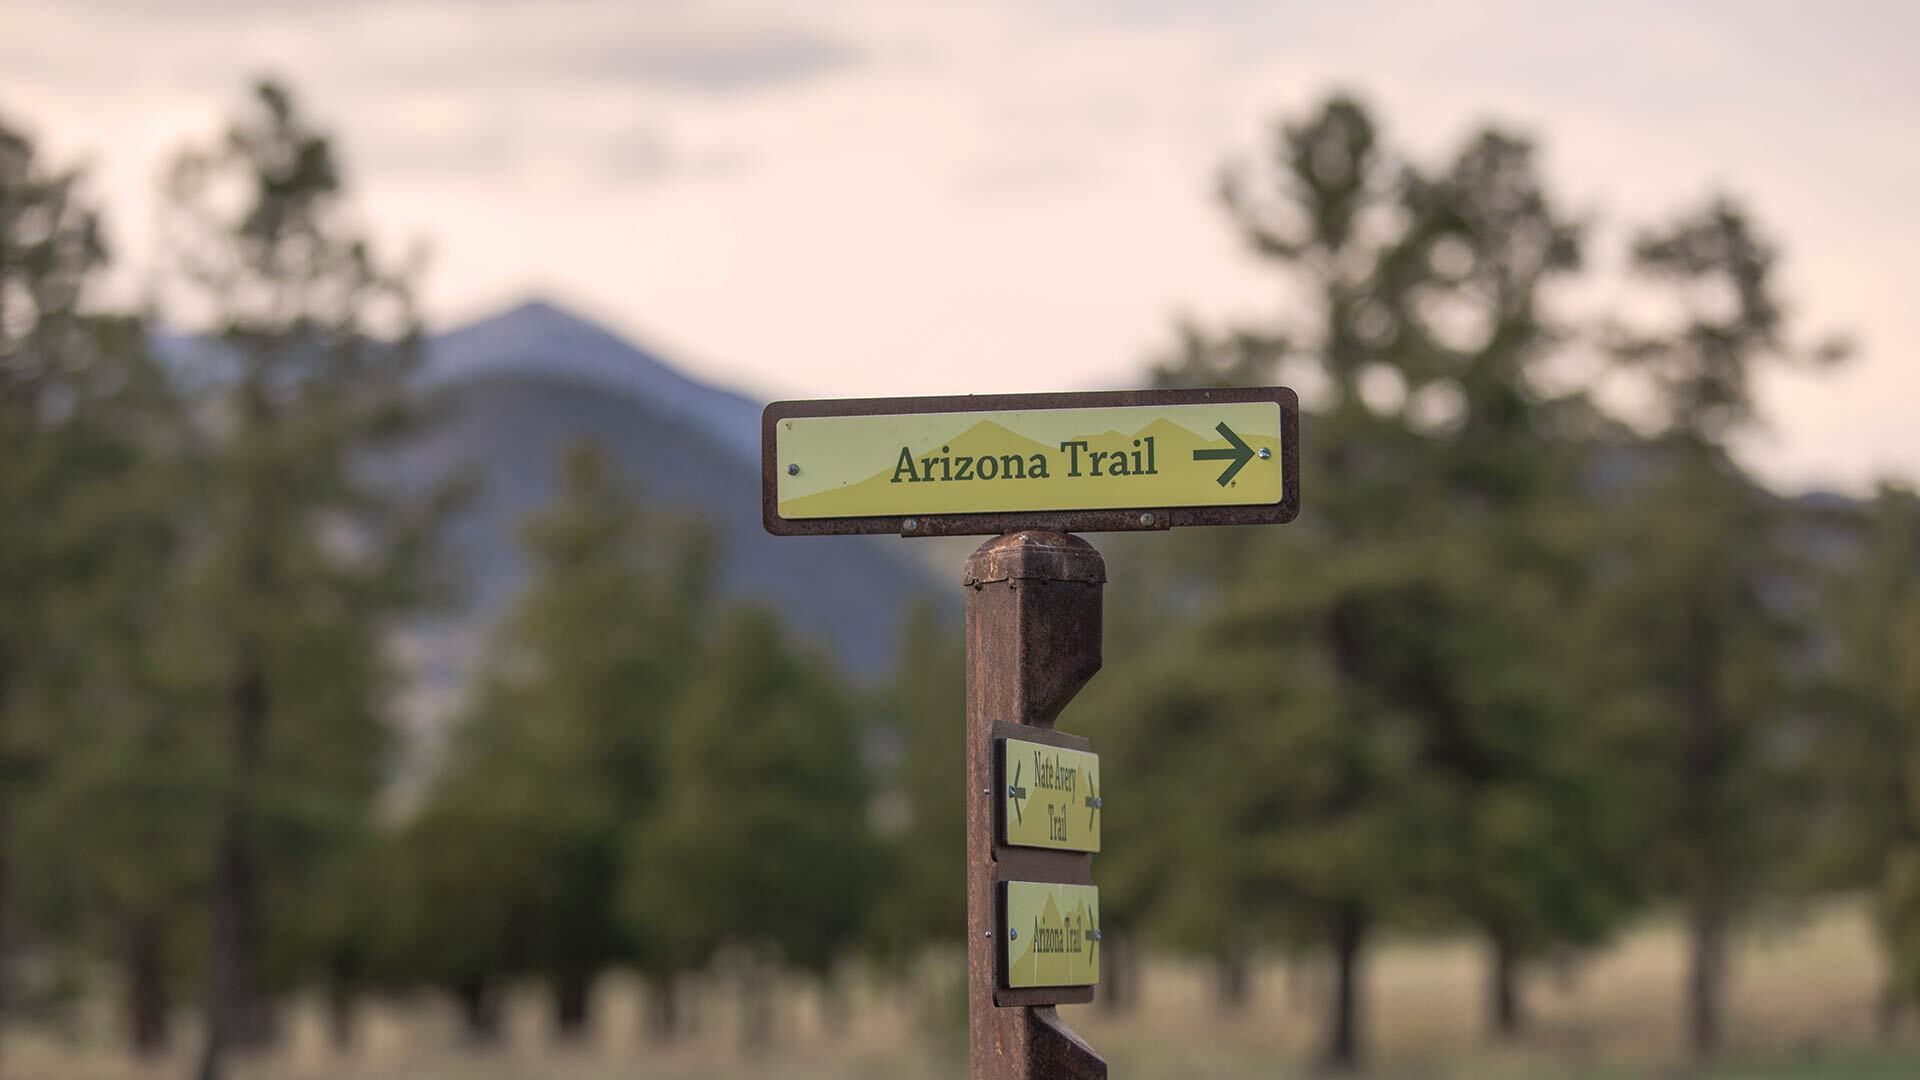 Vlm flagstaff arizona trail sign